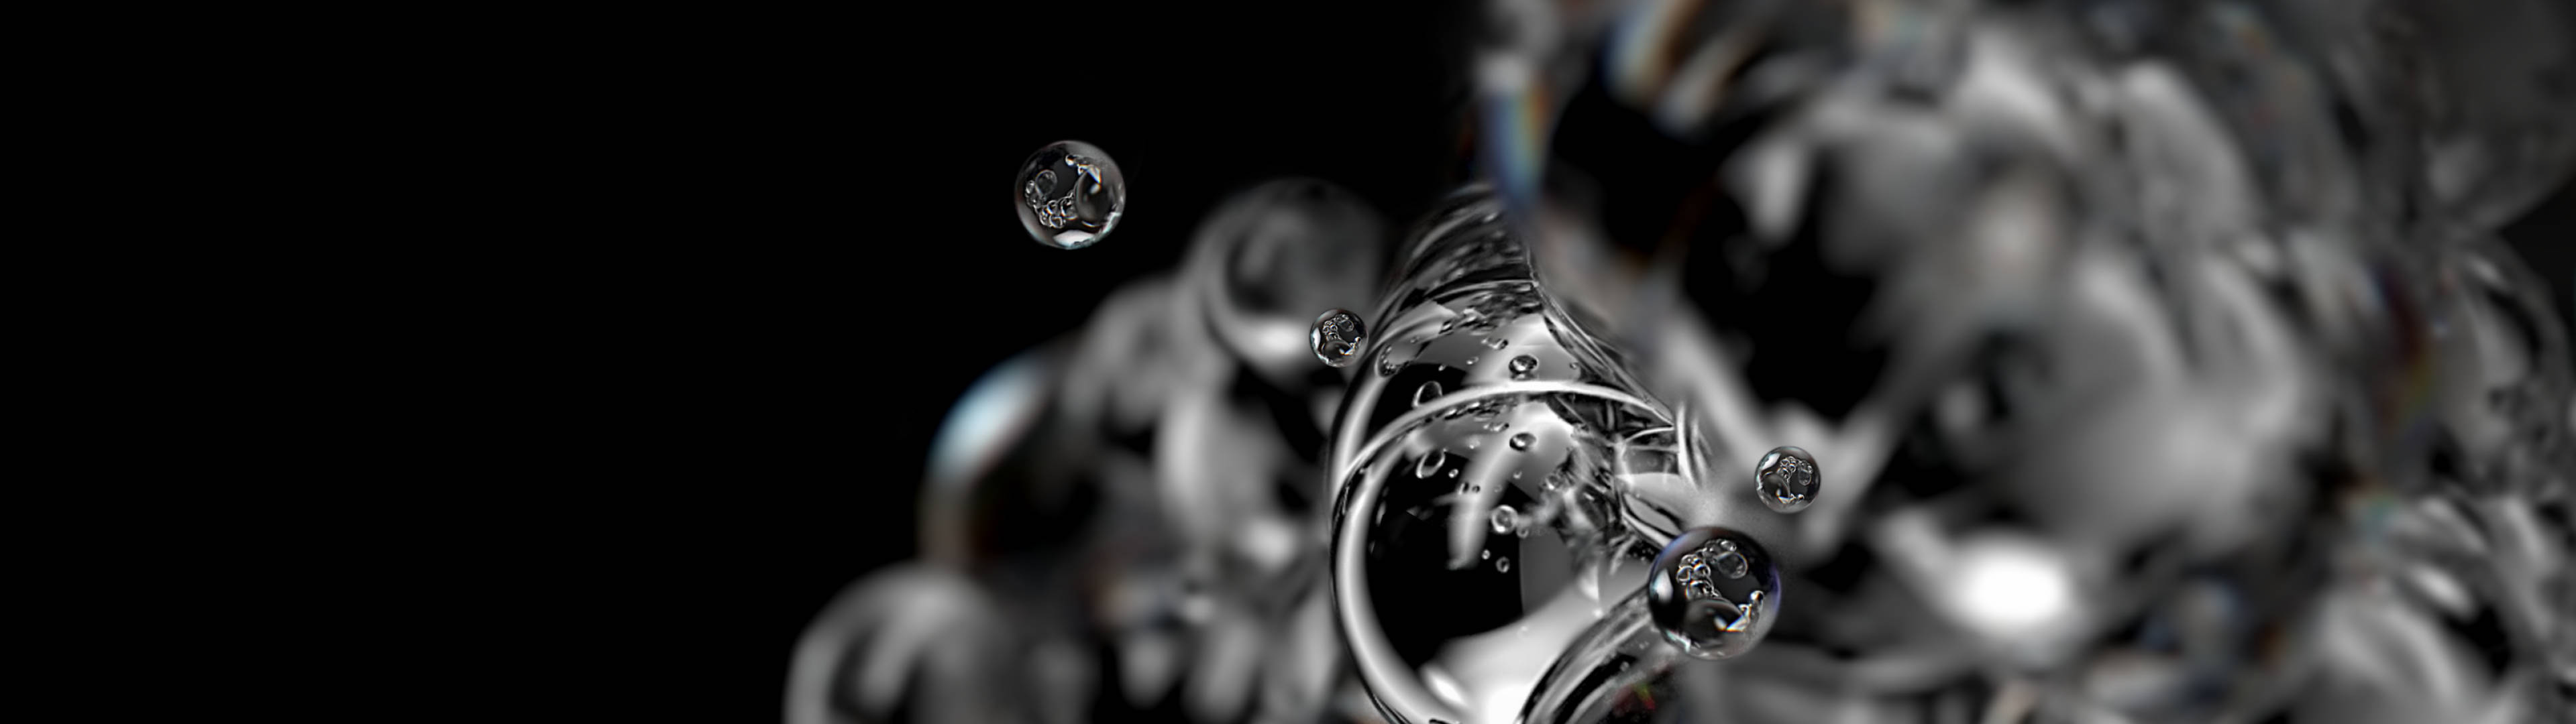 Upward Bubbles 4d Ultra Hd Picture